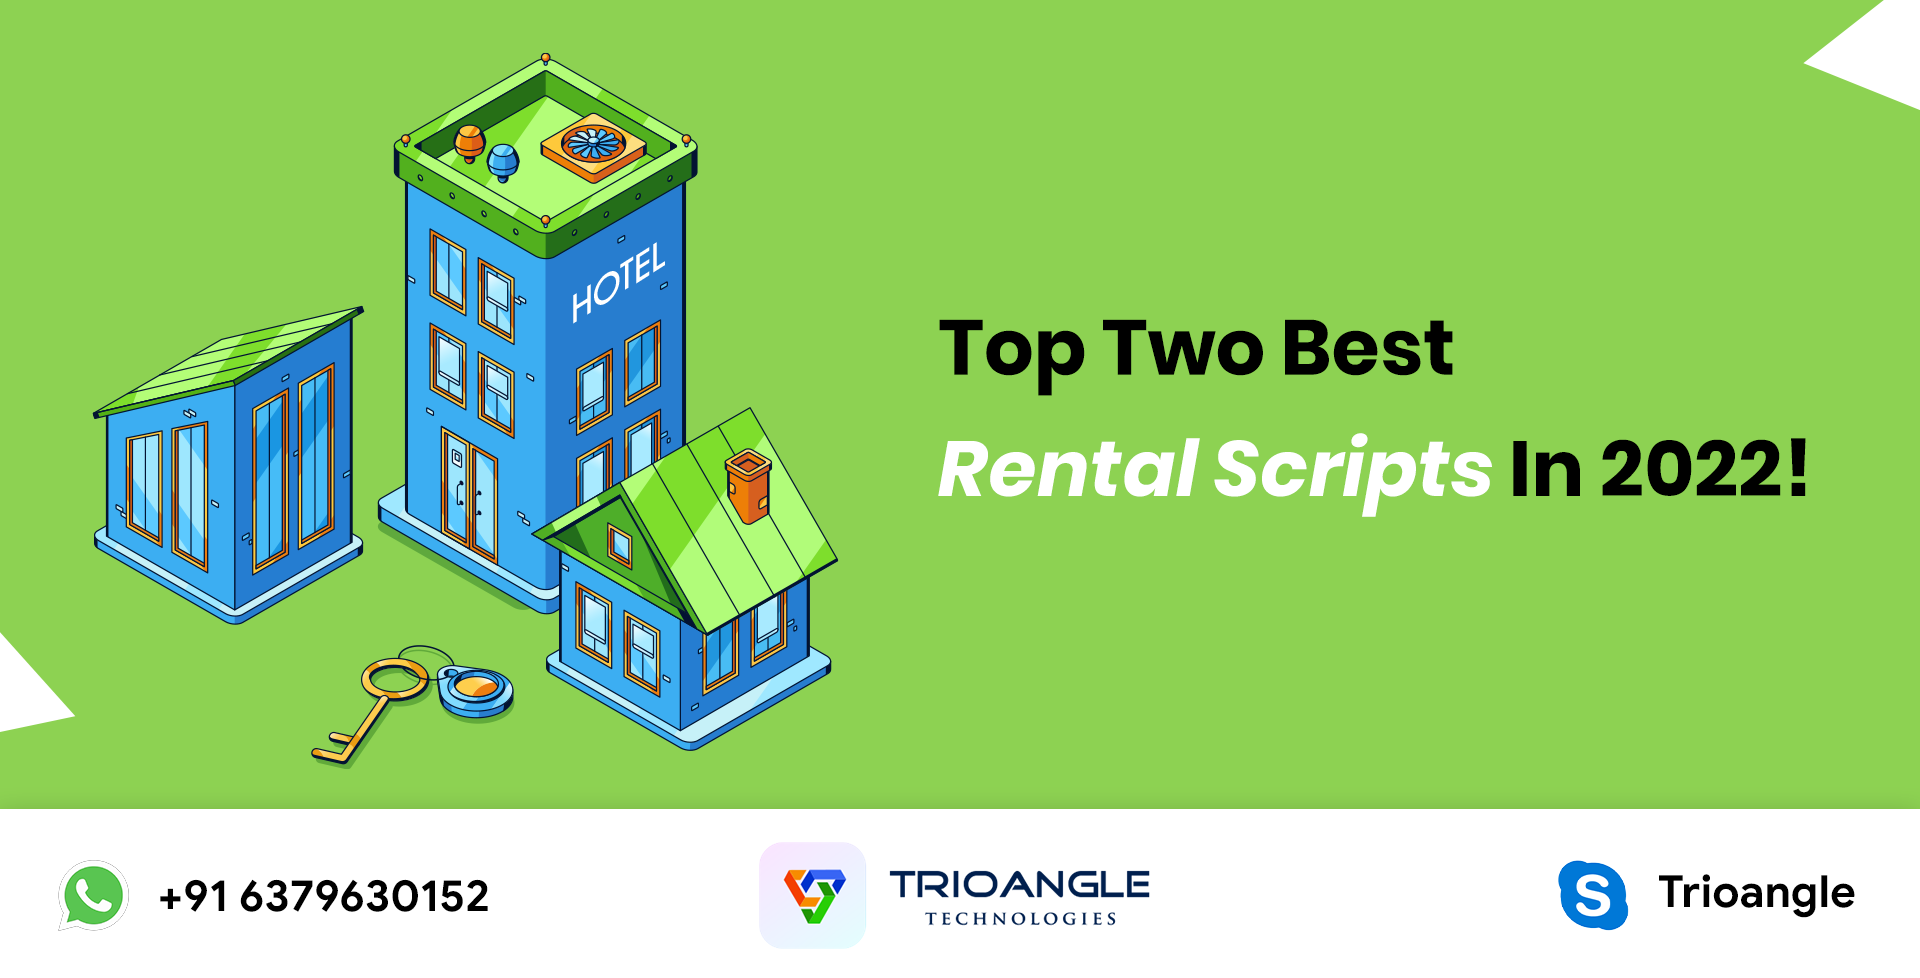 Top Two Best Rental Scripts In 2022!